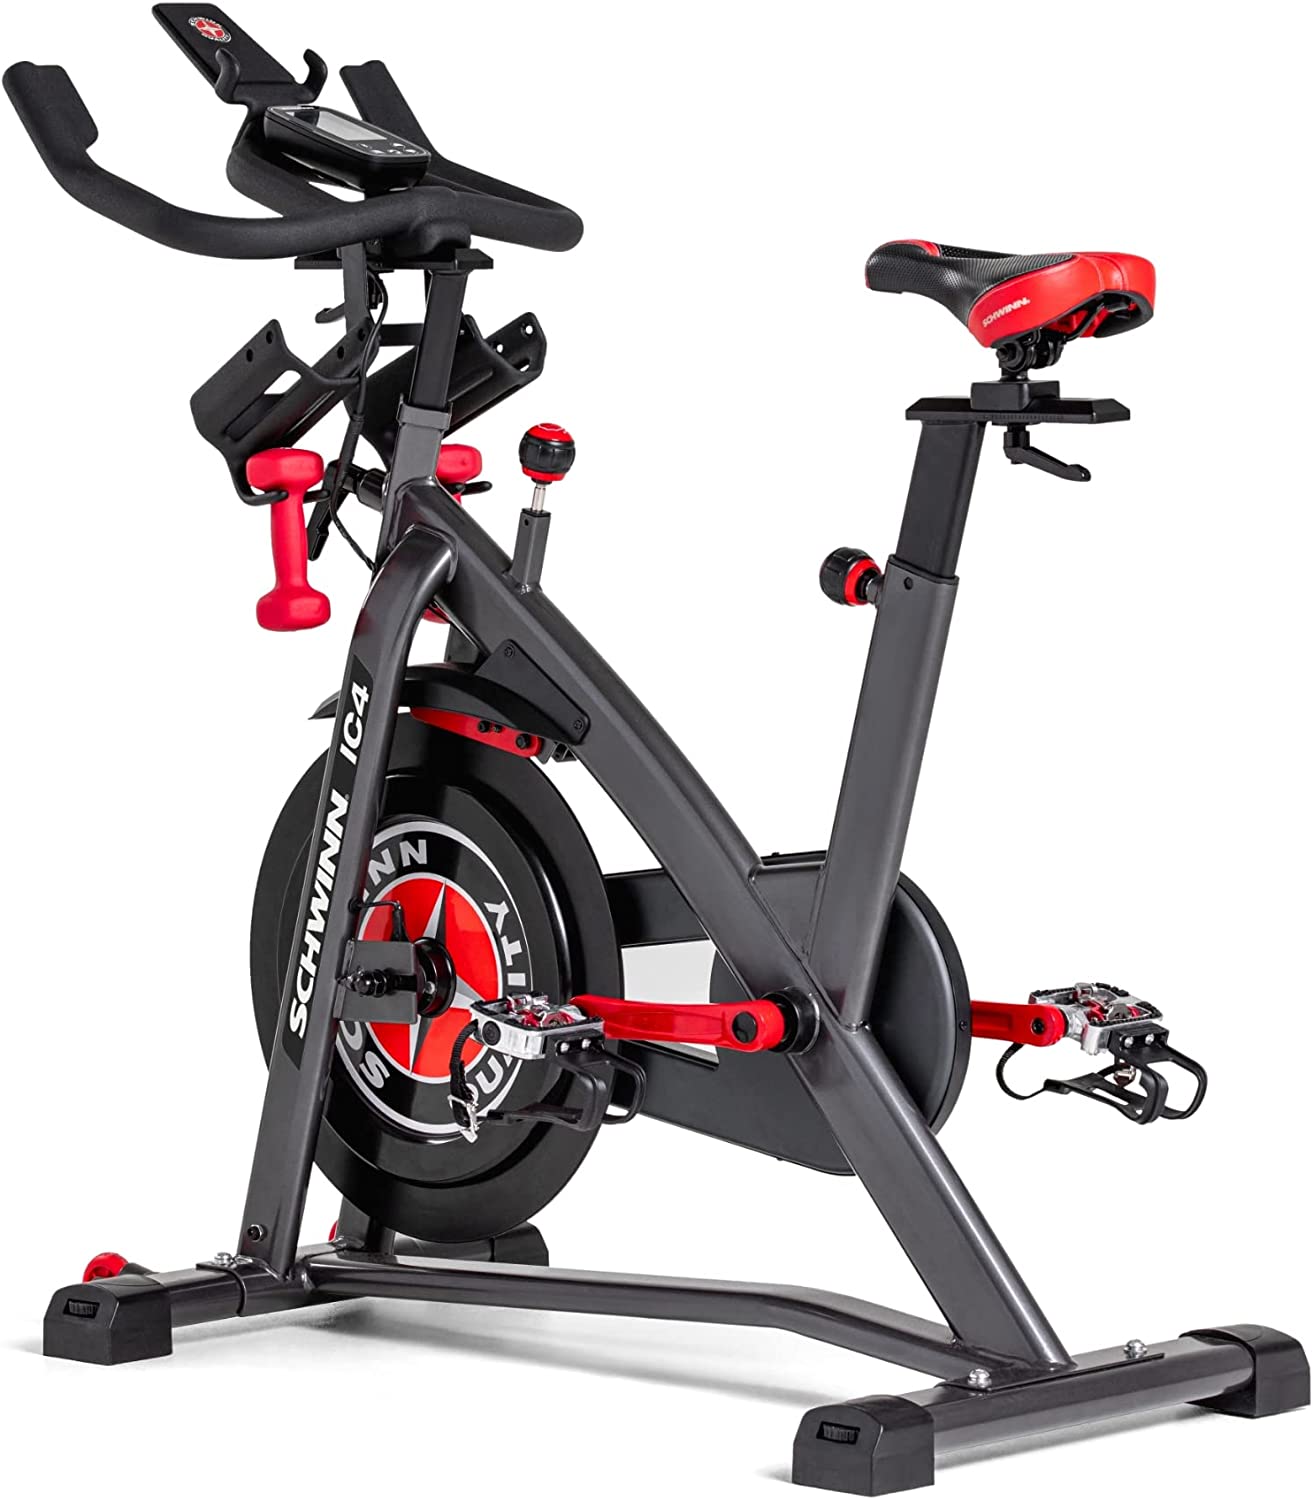 Schwinn Fitness Indoor Cycling Exercise Bike Series - $600